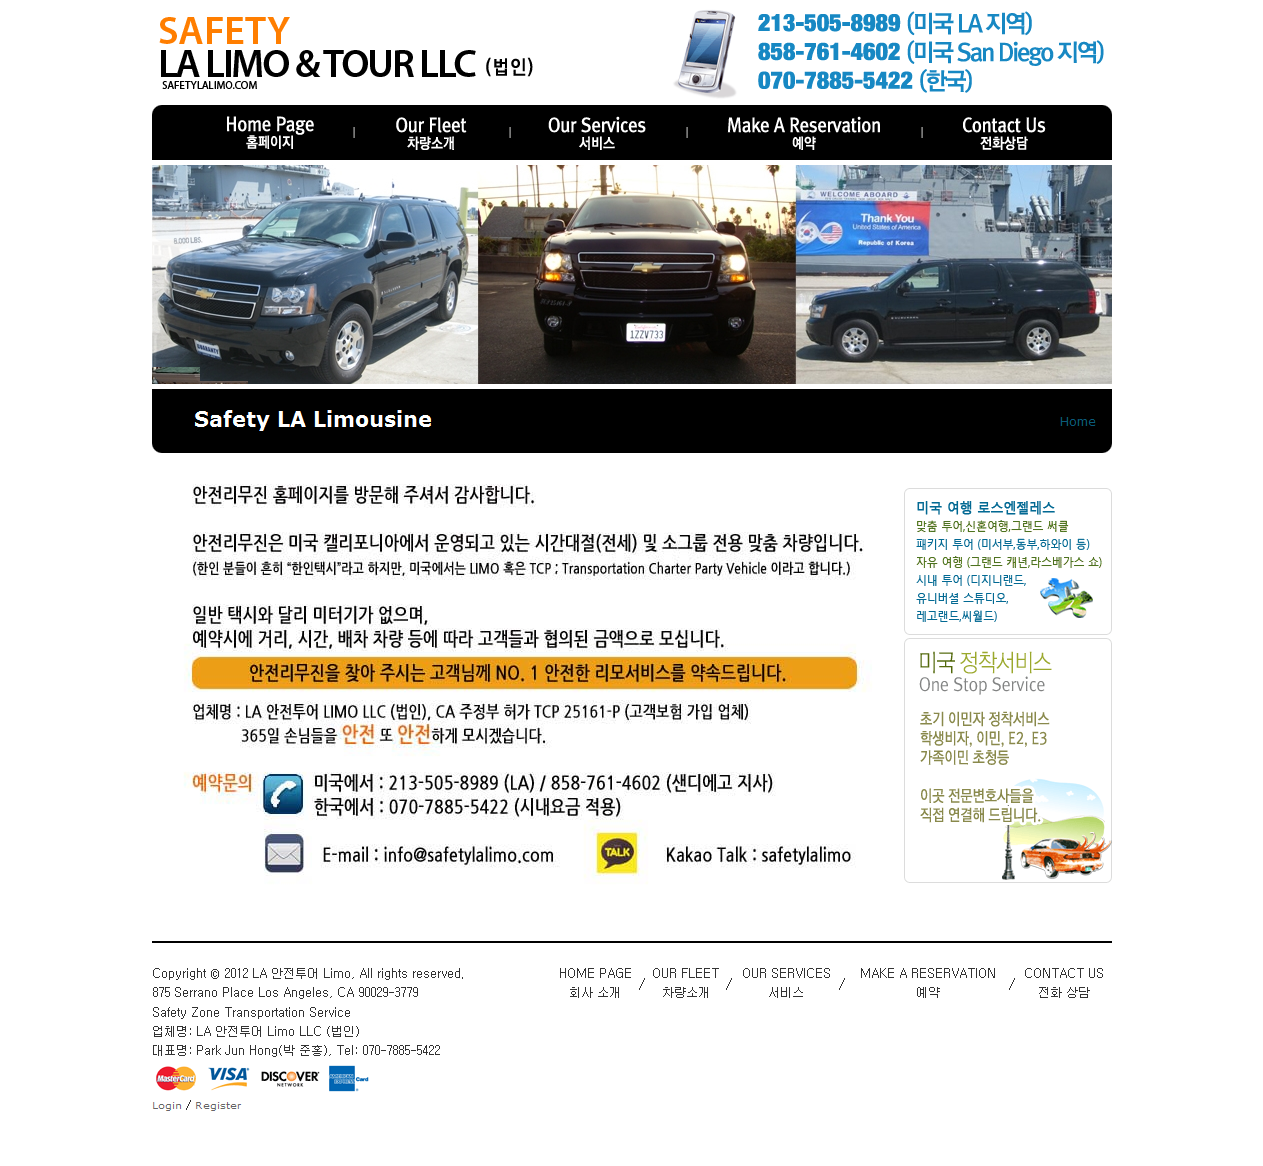 FireShot Screen Capture #275 - 'Safety LA Limousine' - safetylalimo_com.png